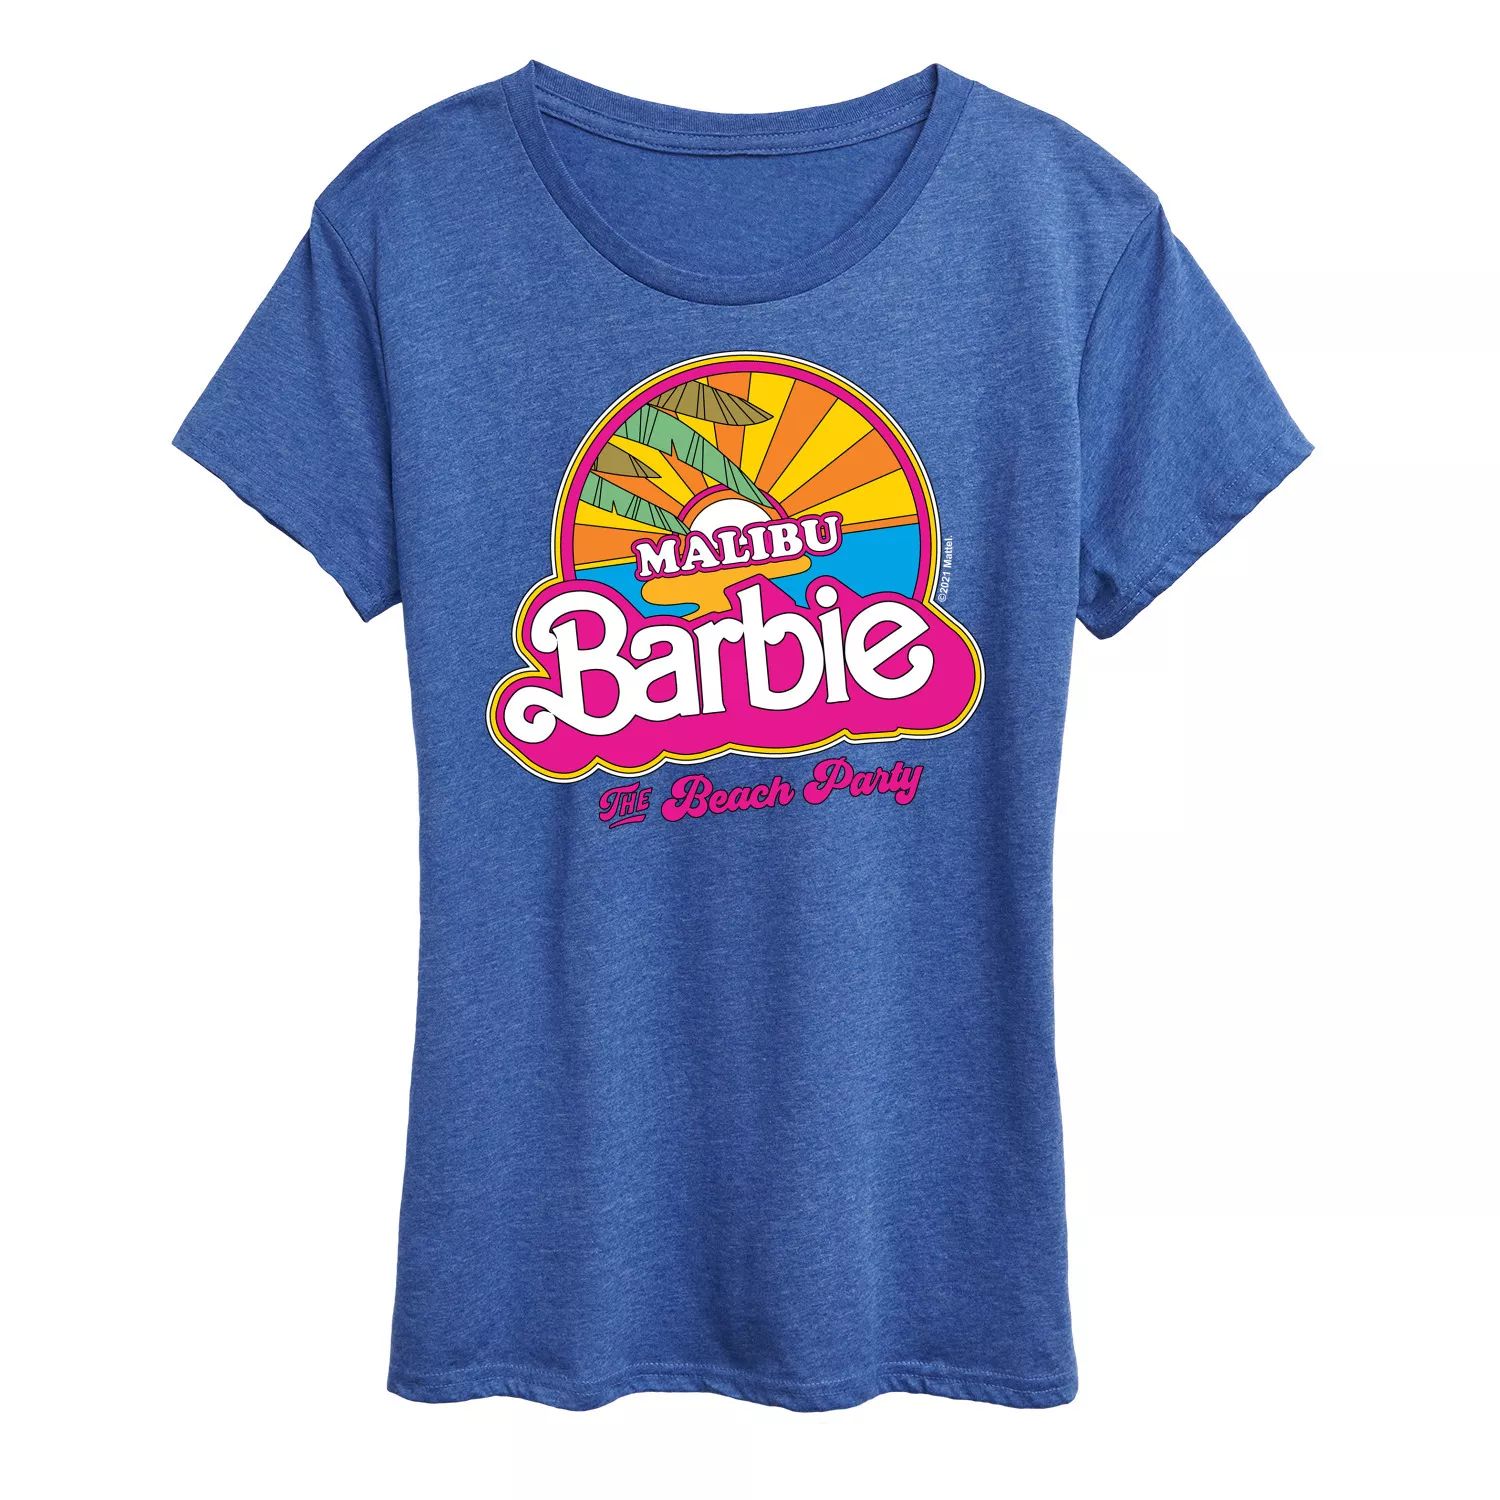 Футболка с рисунком Барби Малибу для юниоров Licensed Character футболка с рисунком барби малибу для юниоров licensed character